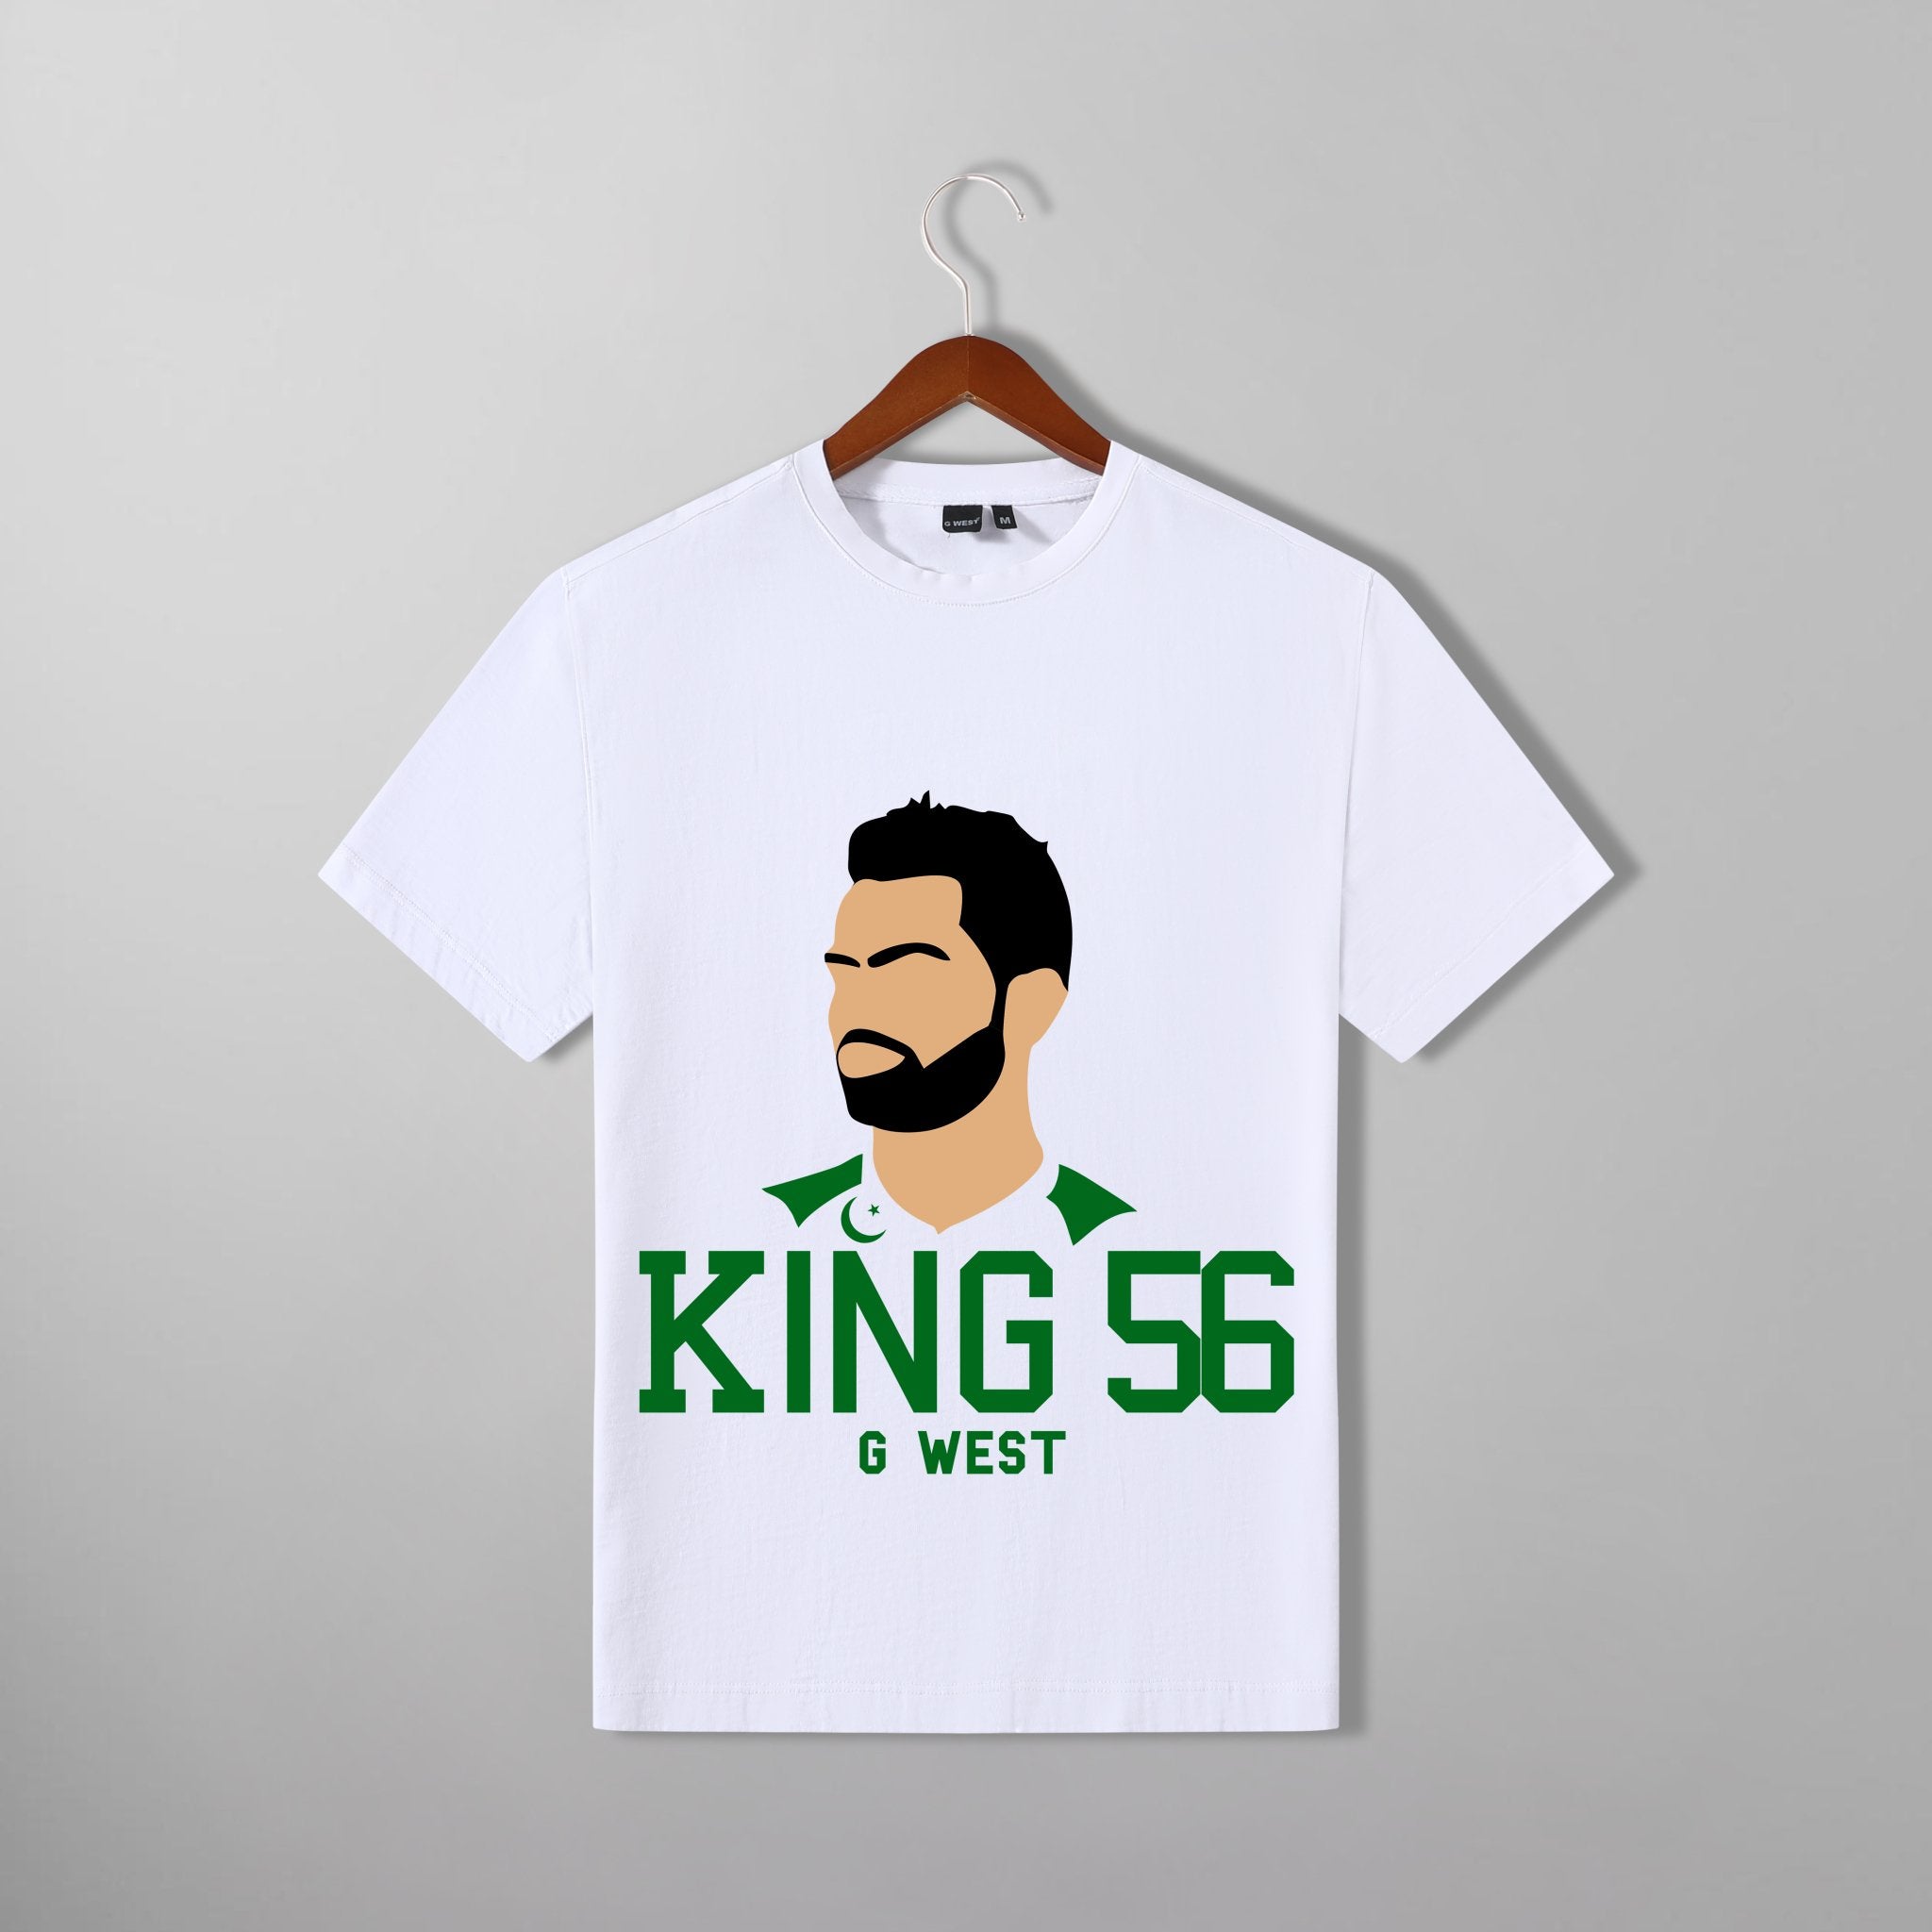 G West Cricket King 56 Black T-Shirt : GWDTFL2408 - 2 COLORS - G West